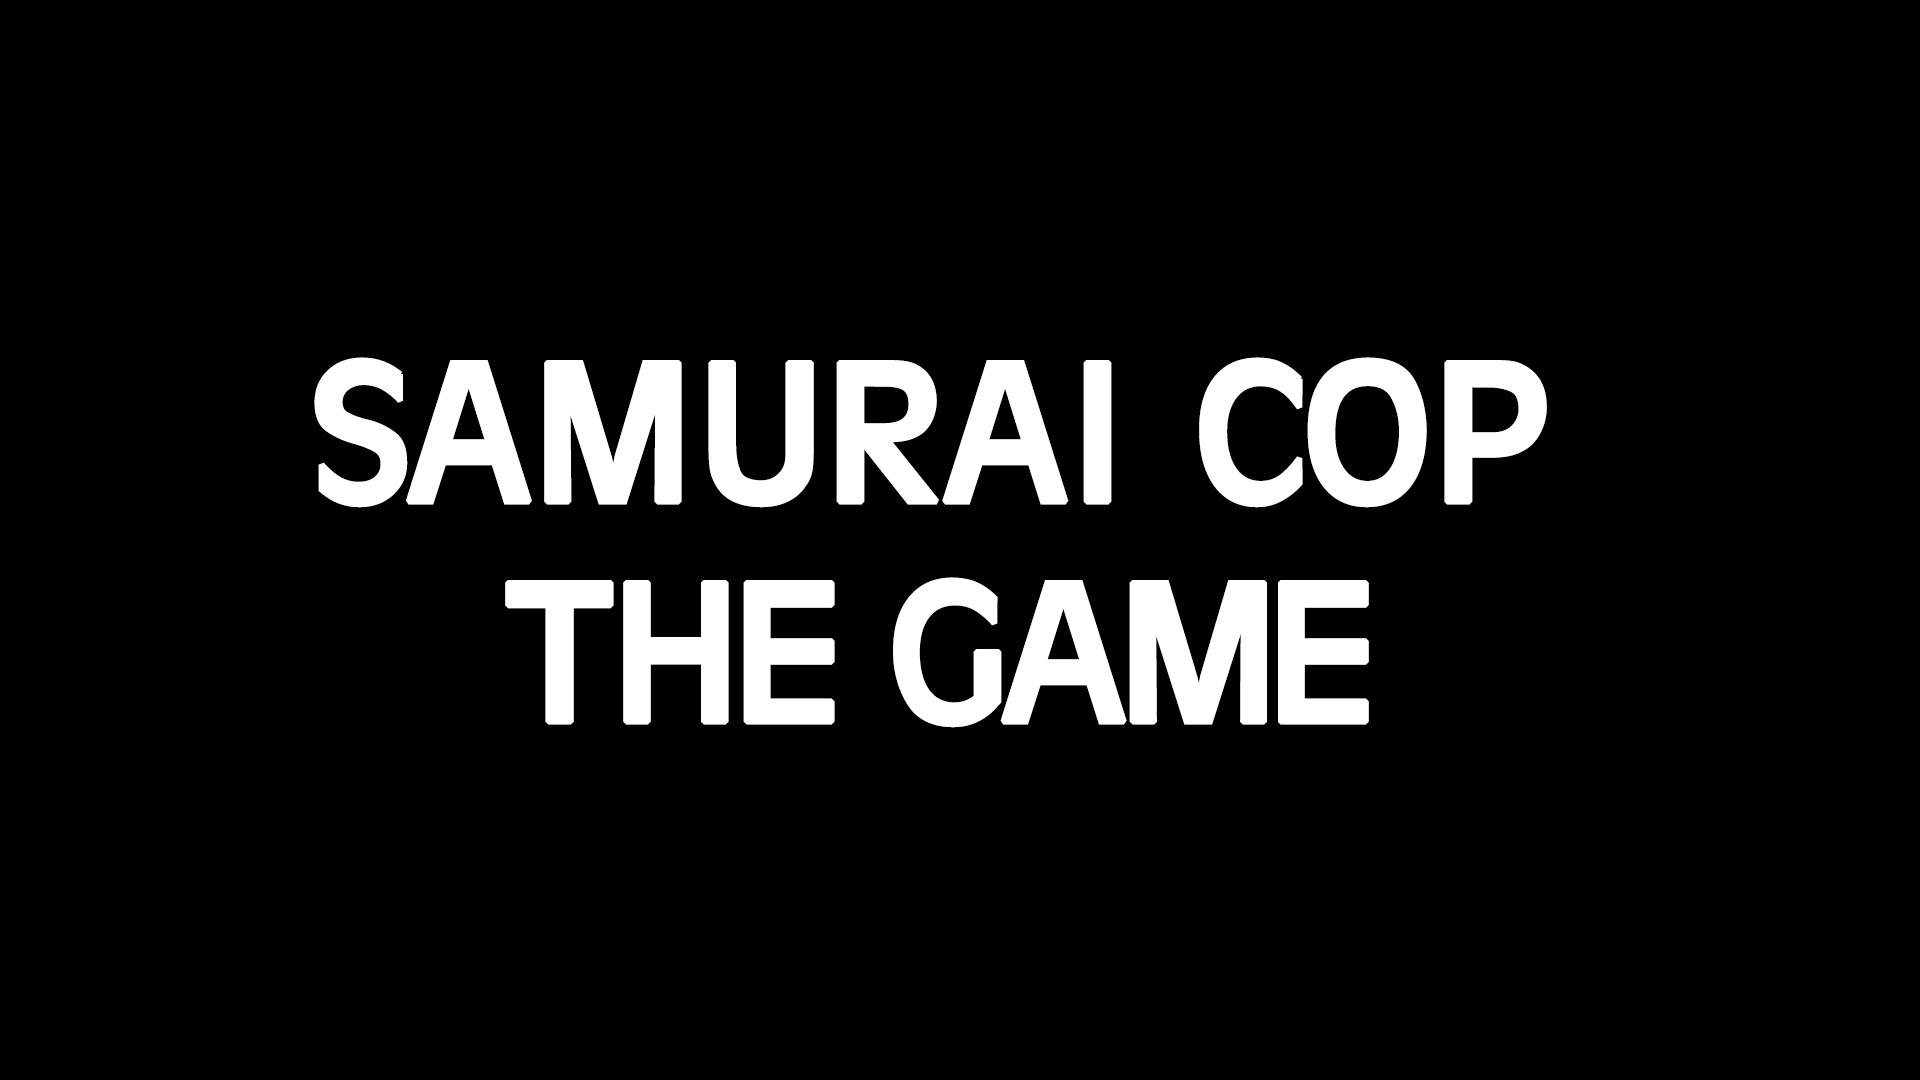 Sekai-Games_06-07-18_Samurai-Cop-The-Game_001.jpg